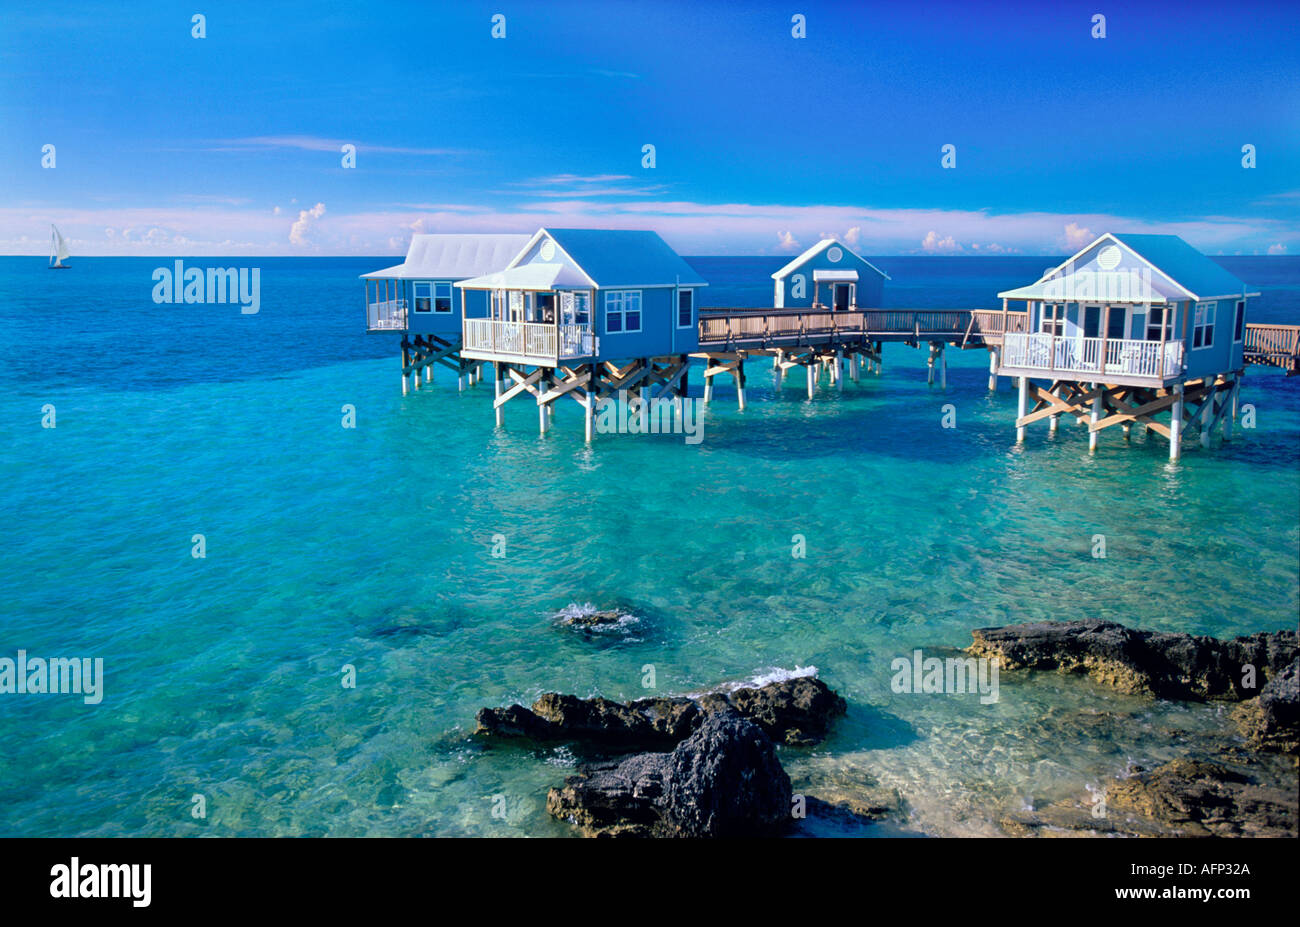 Bermuda Caribbean Resort guest cabins on ocean blue waters of the Caribbean Ocean Stock Photo